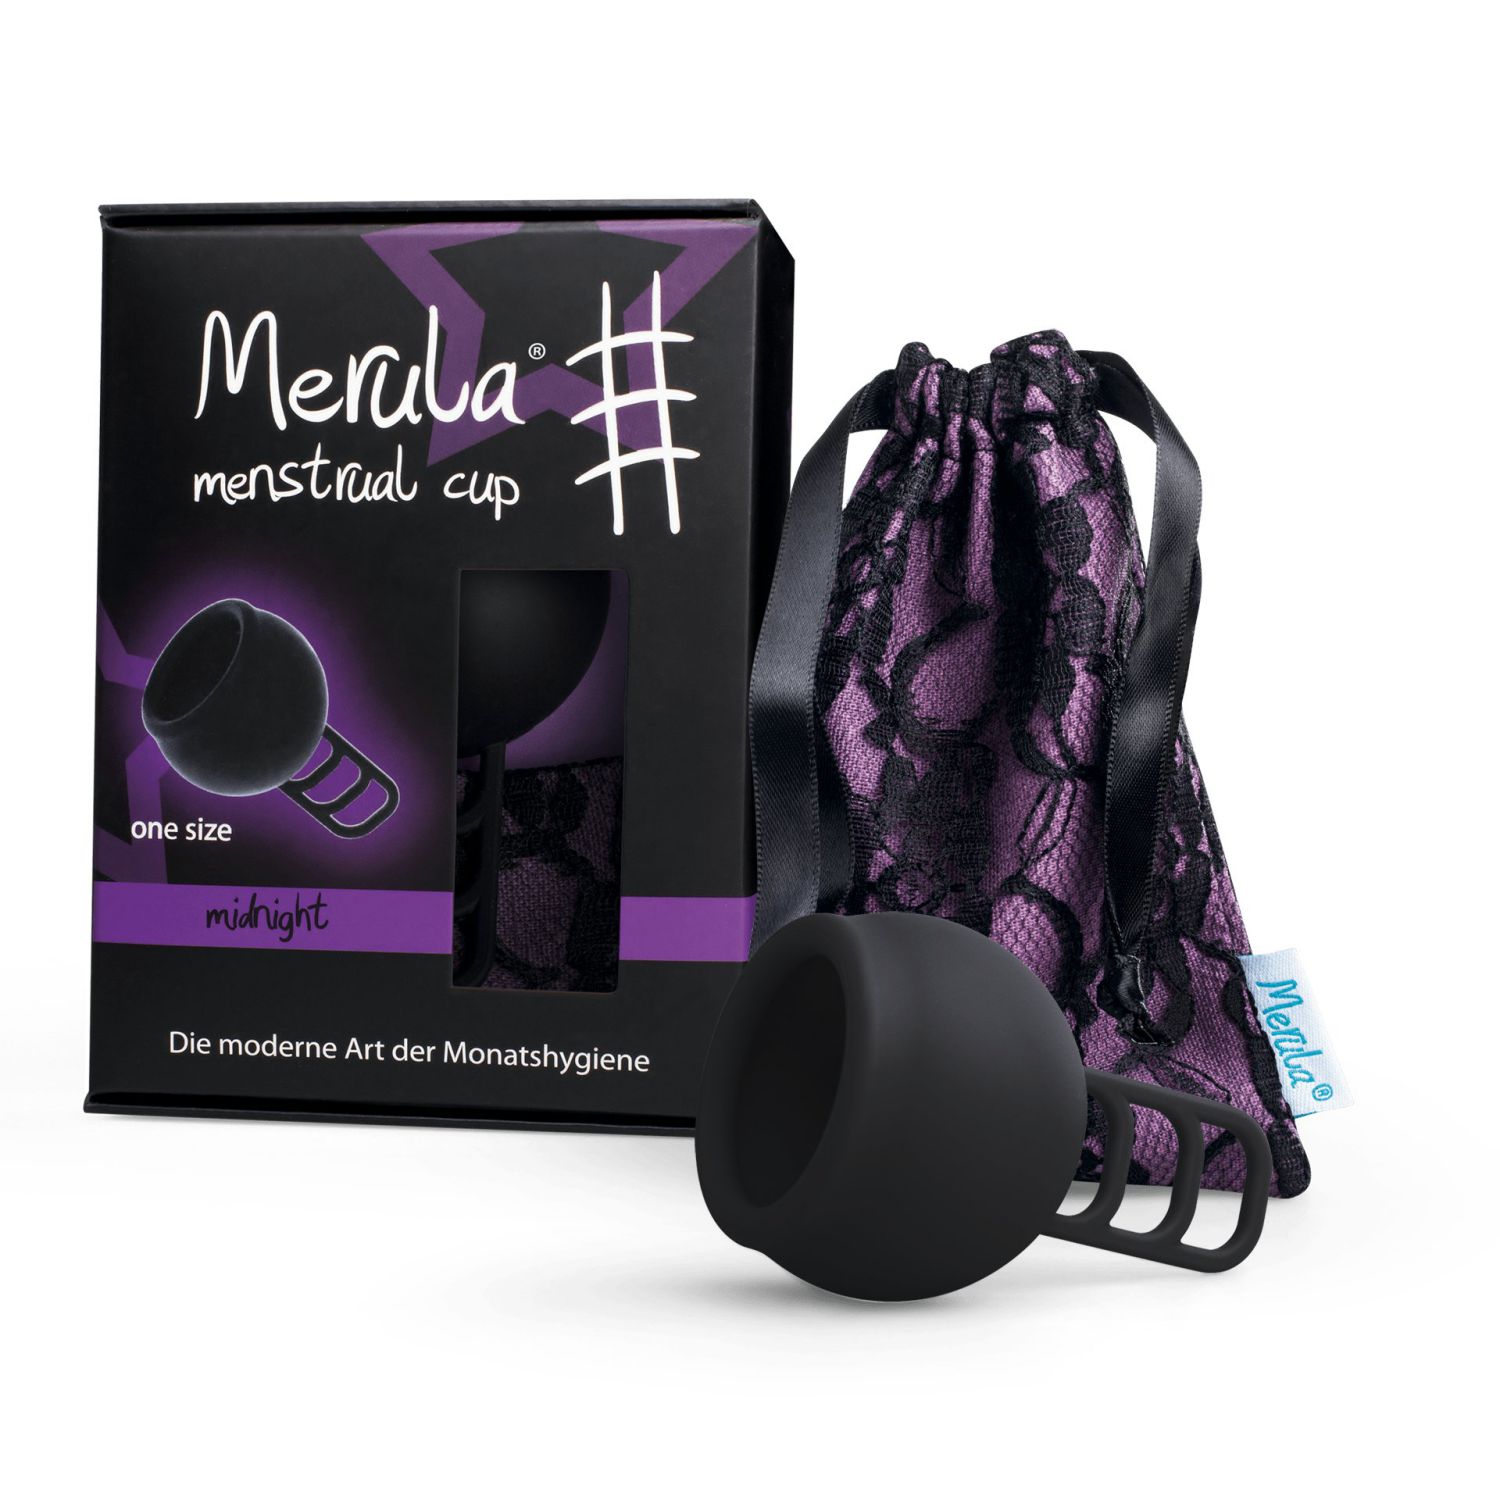 Merula Cup One Size Menstruationstasse